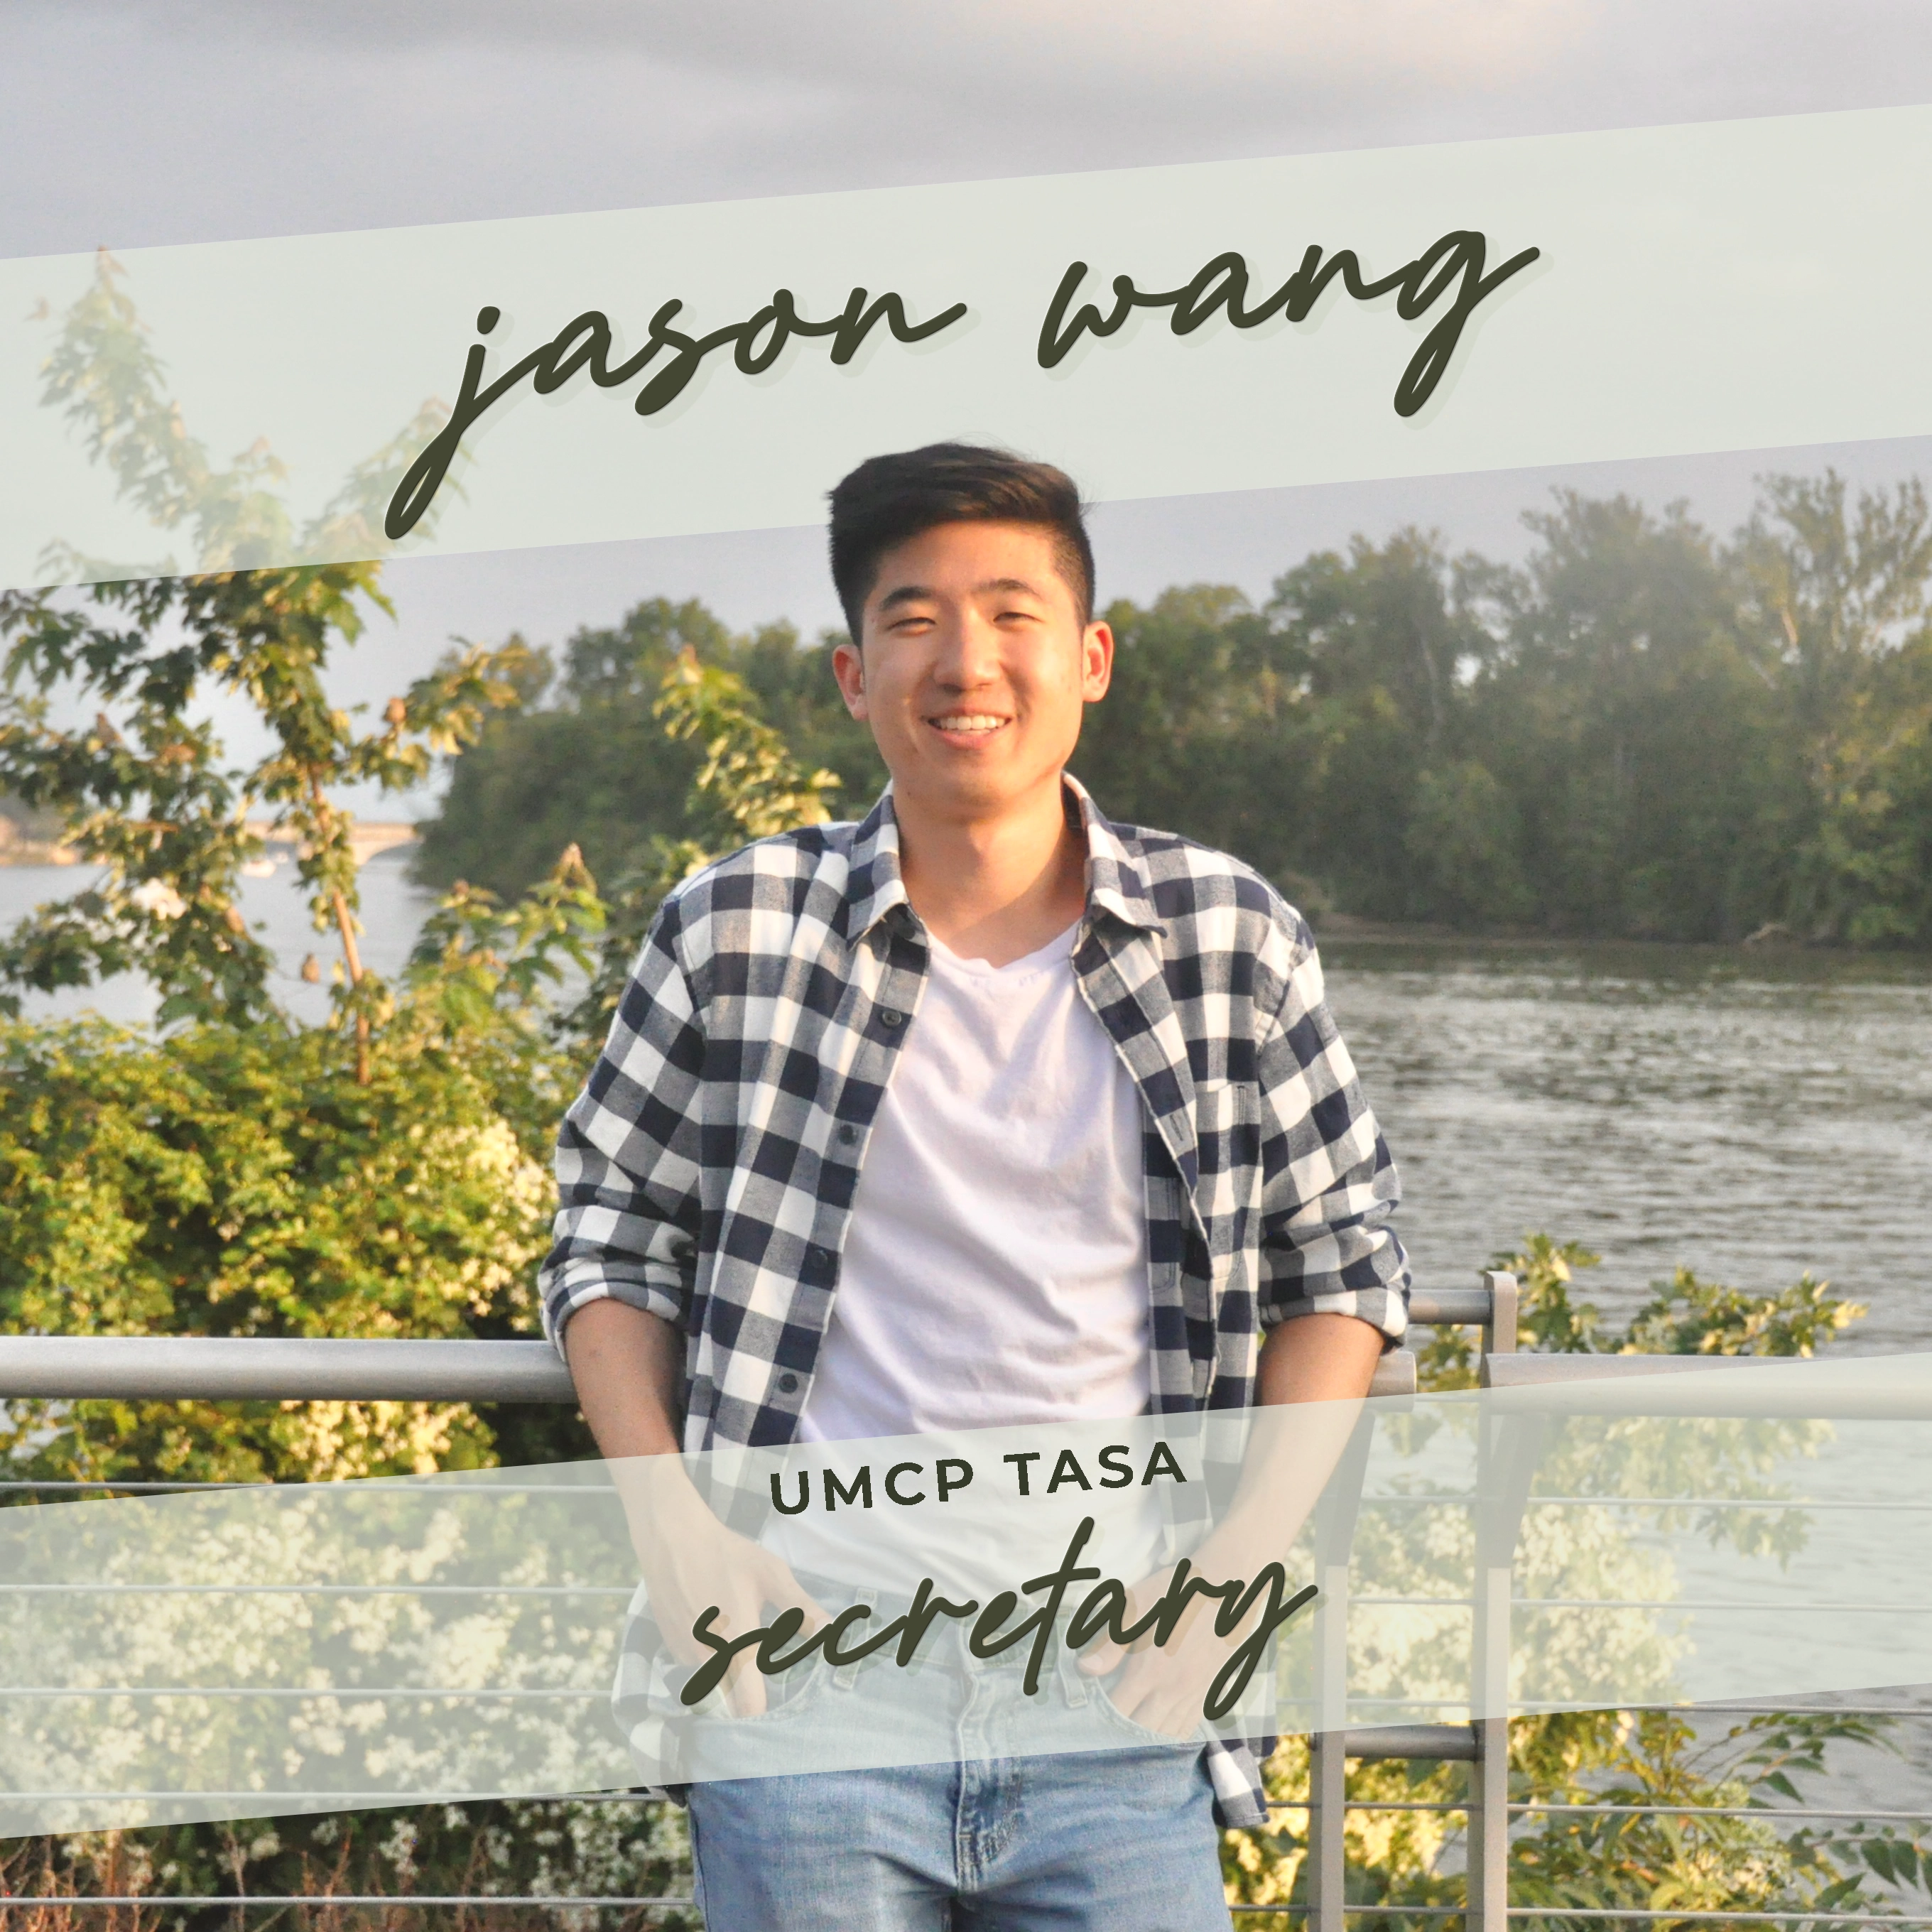 Jason Wang's' bio picture